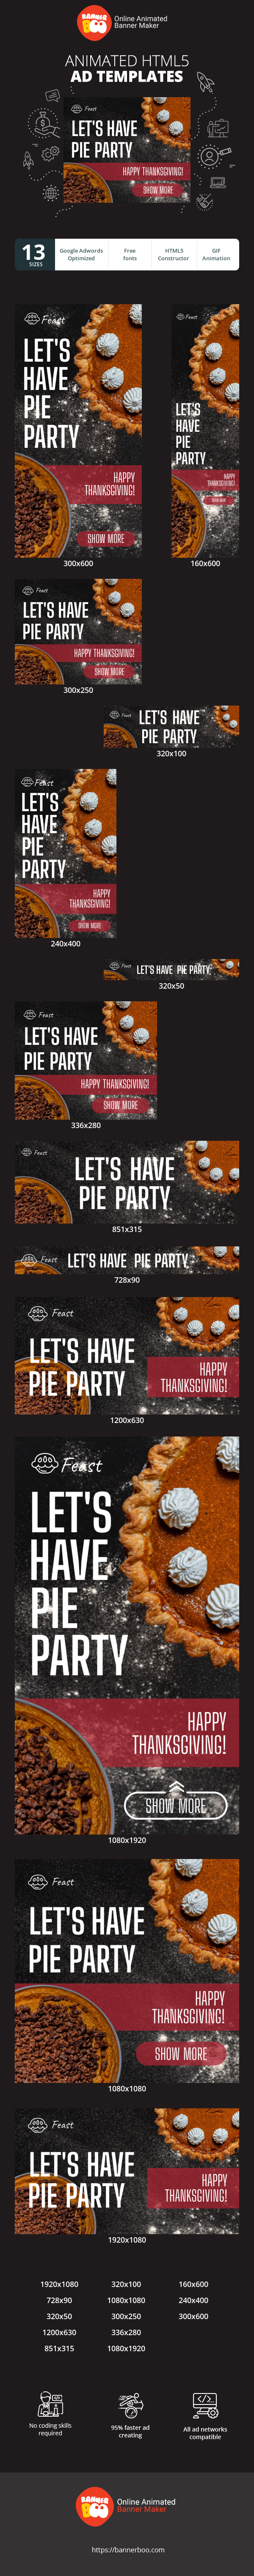 Szablon reklamy banerowej — Let's Have Pie Party —Happy Thanksgiving